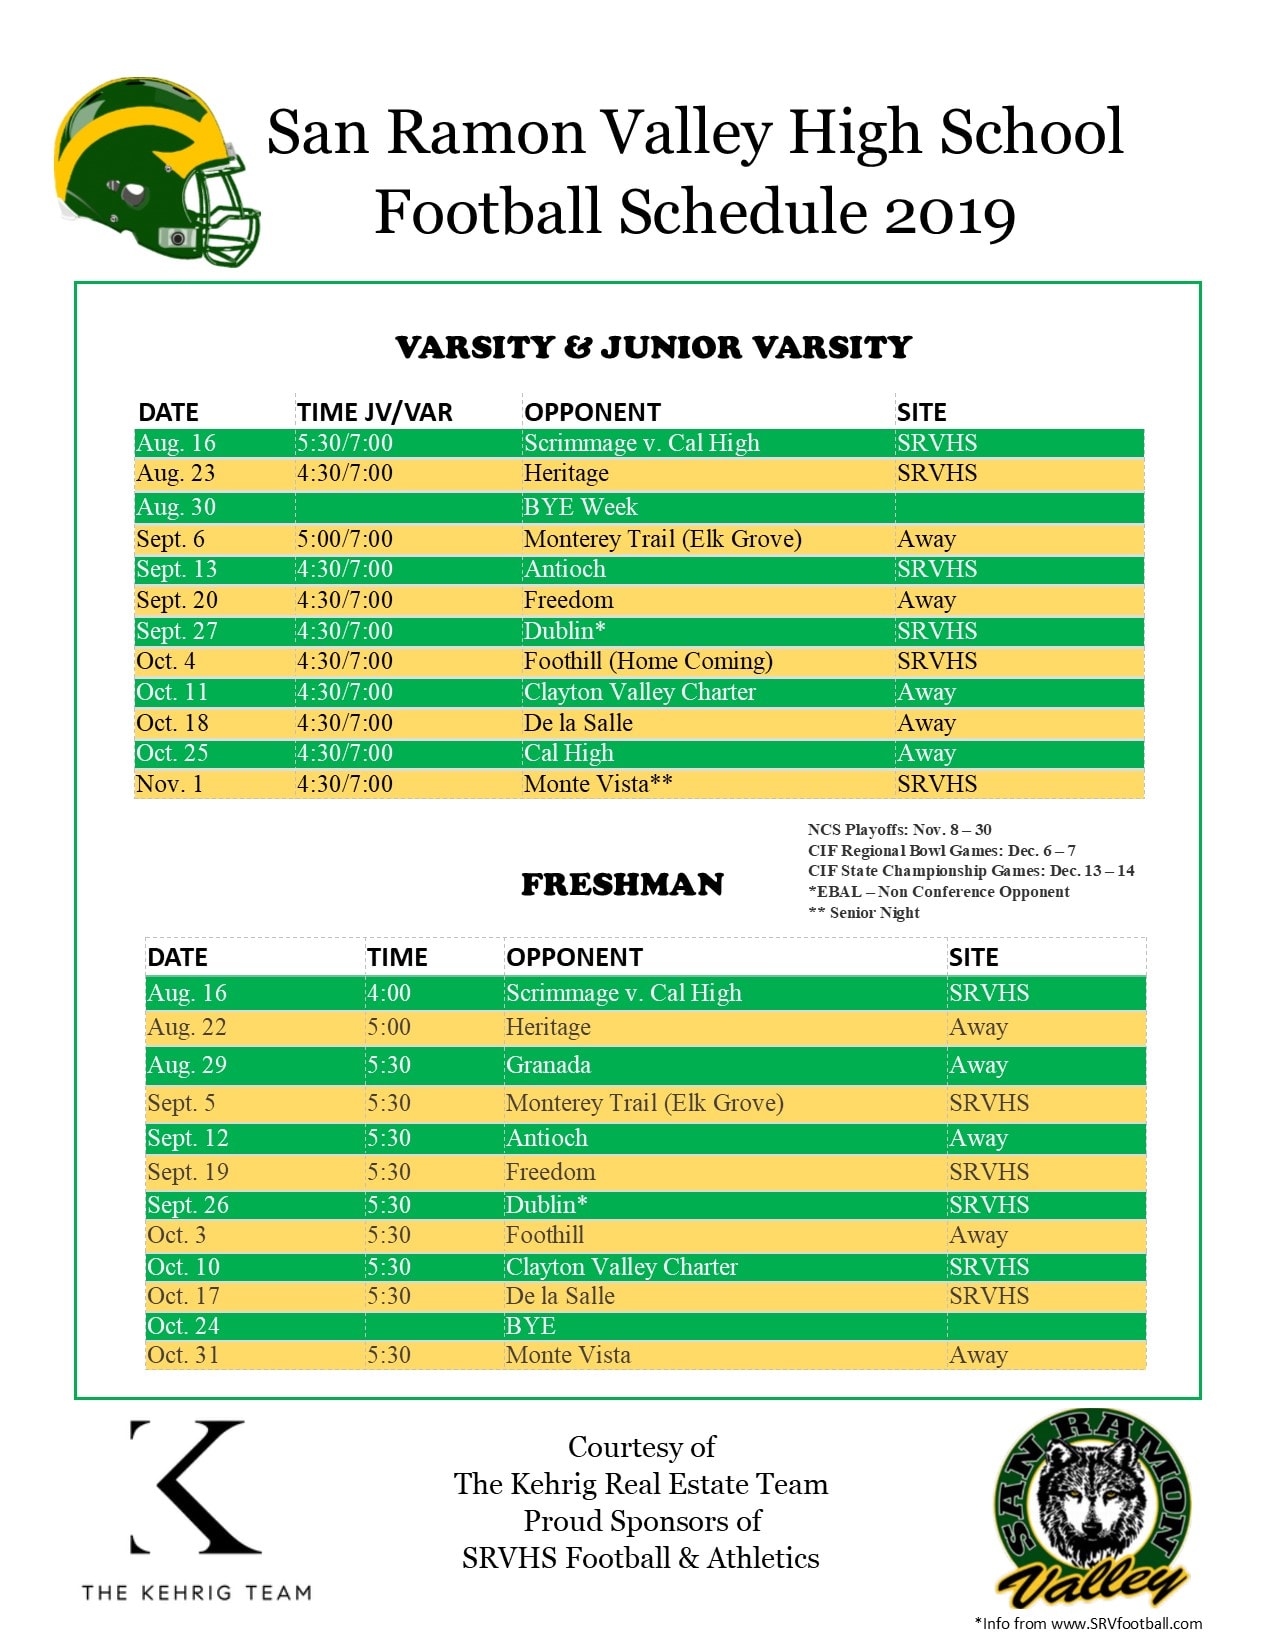 San Ramon Valley High School 2019 Football Schedule